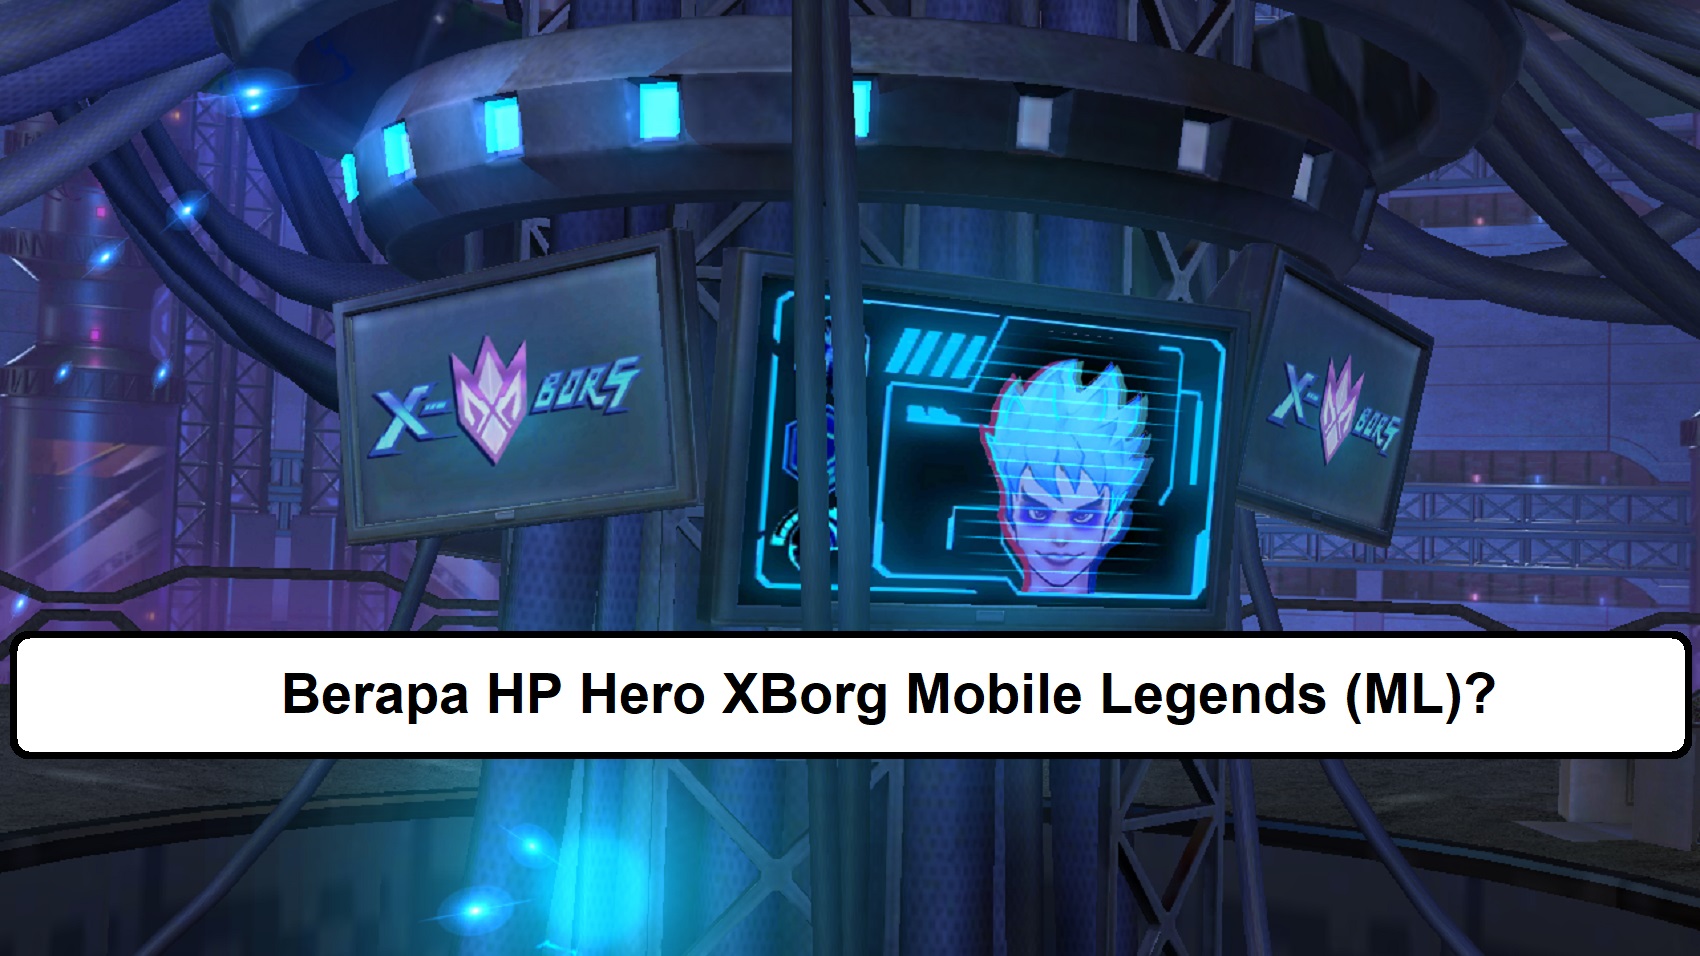 Berapa HP Hero XBorg Mobile Legends (ML)?